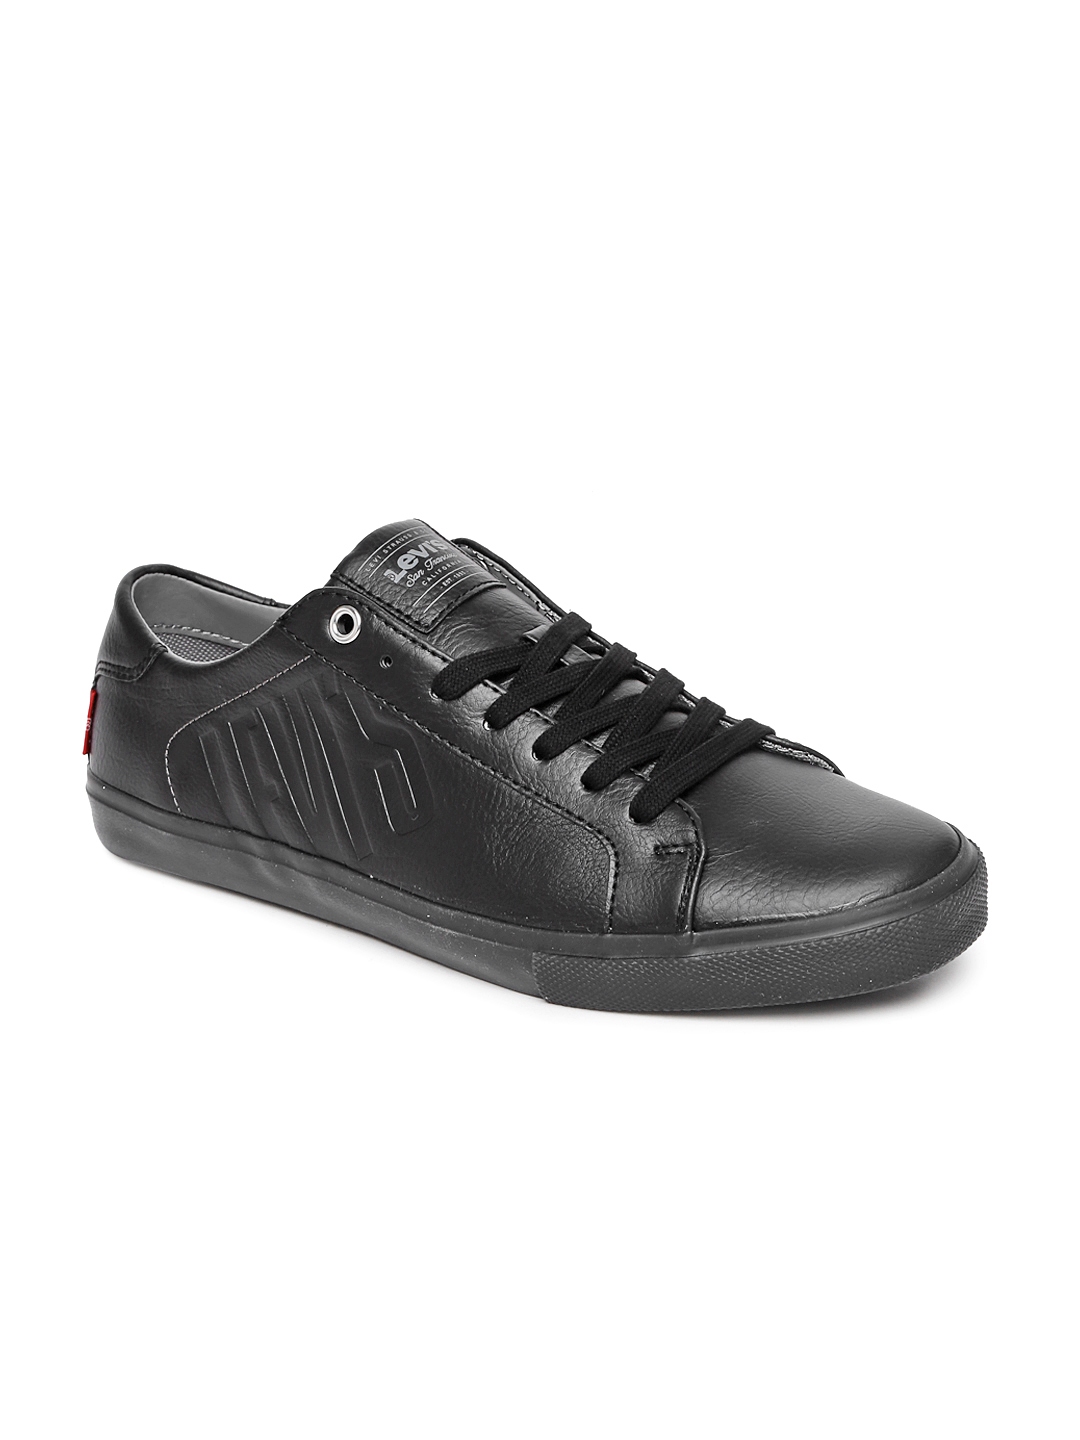 Buy Levis Men Black Sneakers - Casual Shoes for Men 2447495 | Myntra